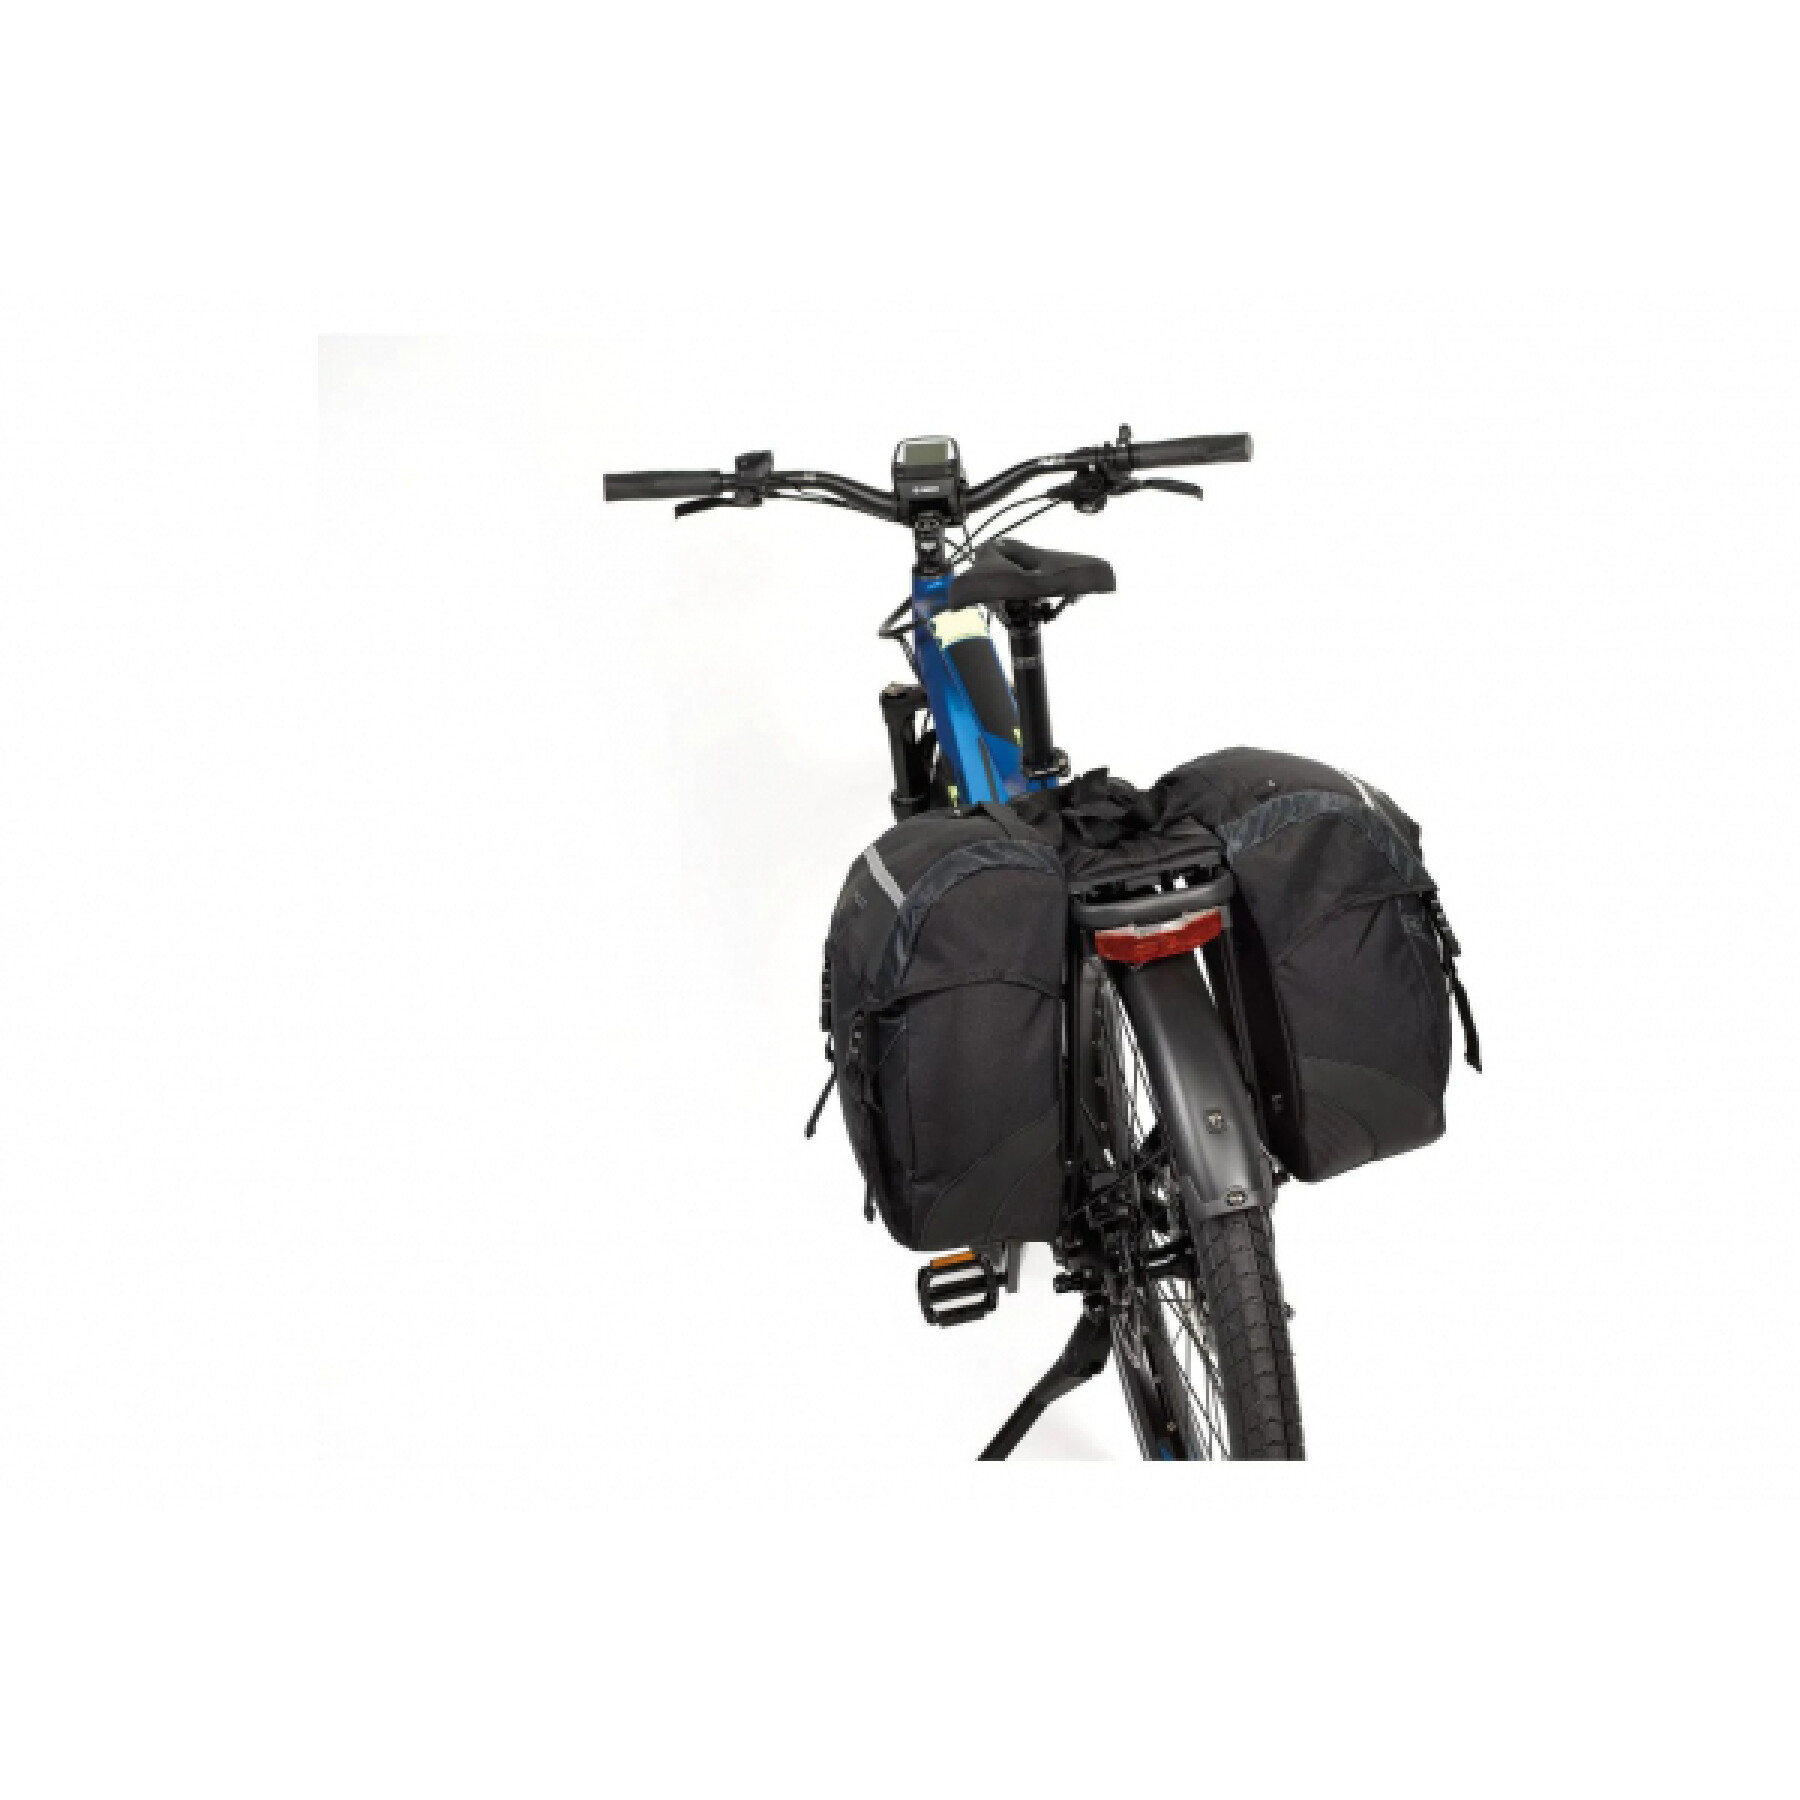 Transport Plus saco de transporte de bicicletas para porta-bagagens XLC Ba-s63